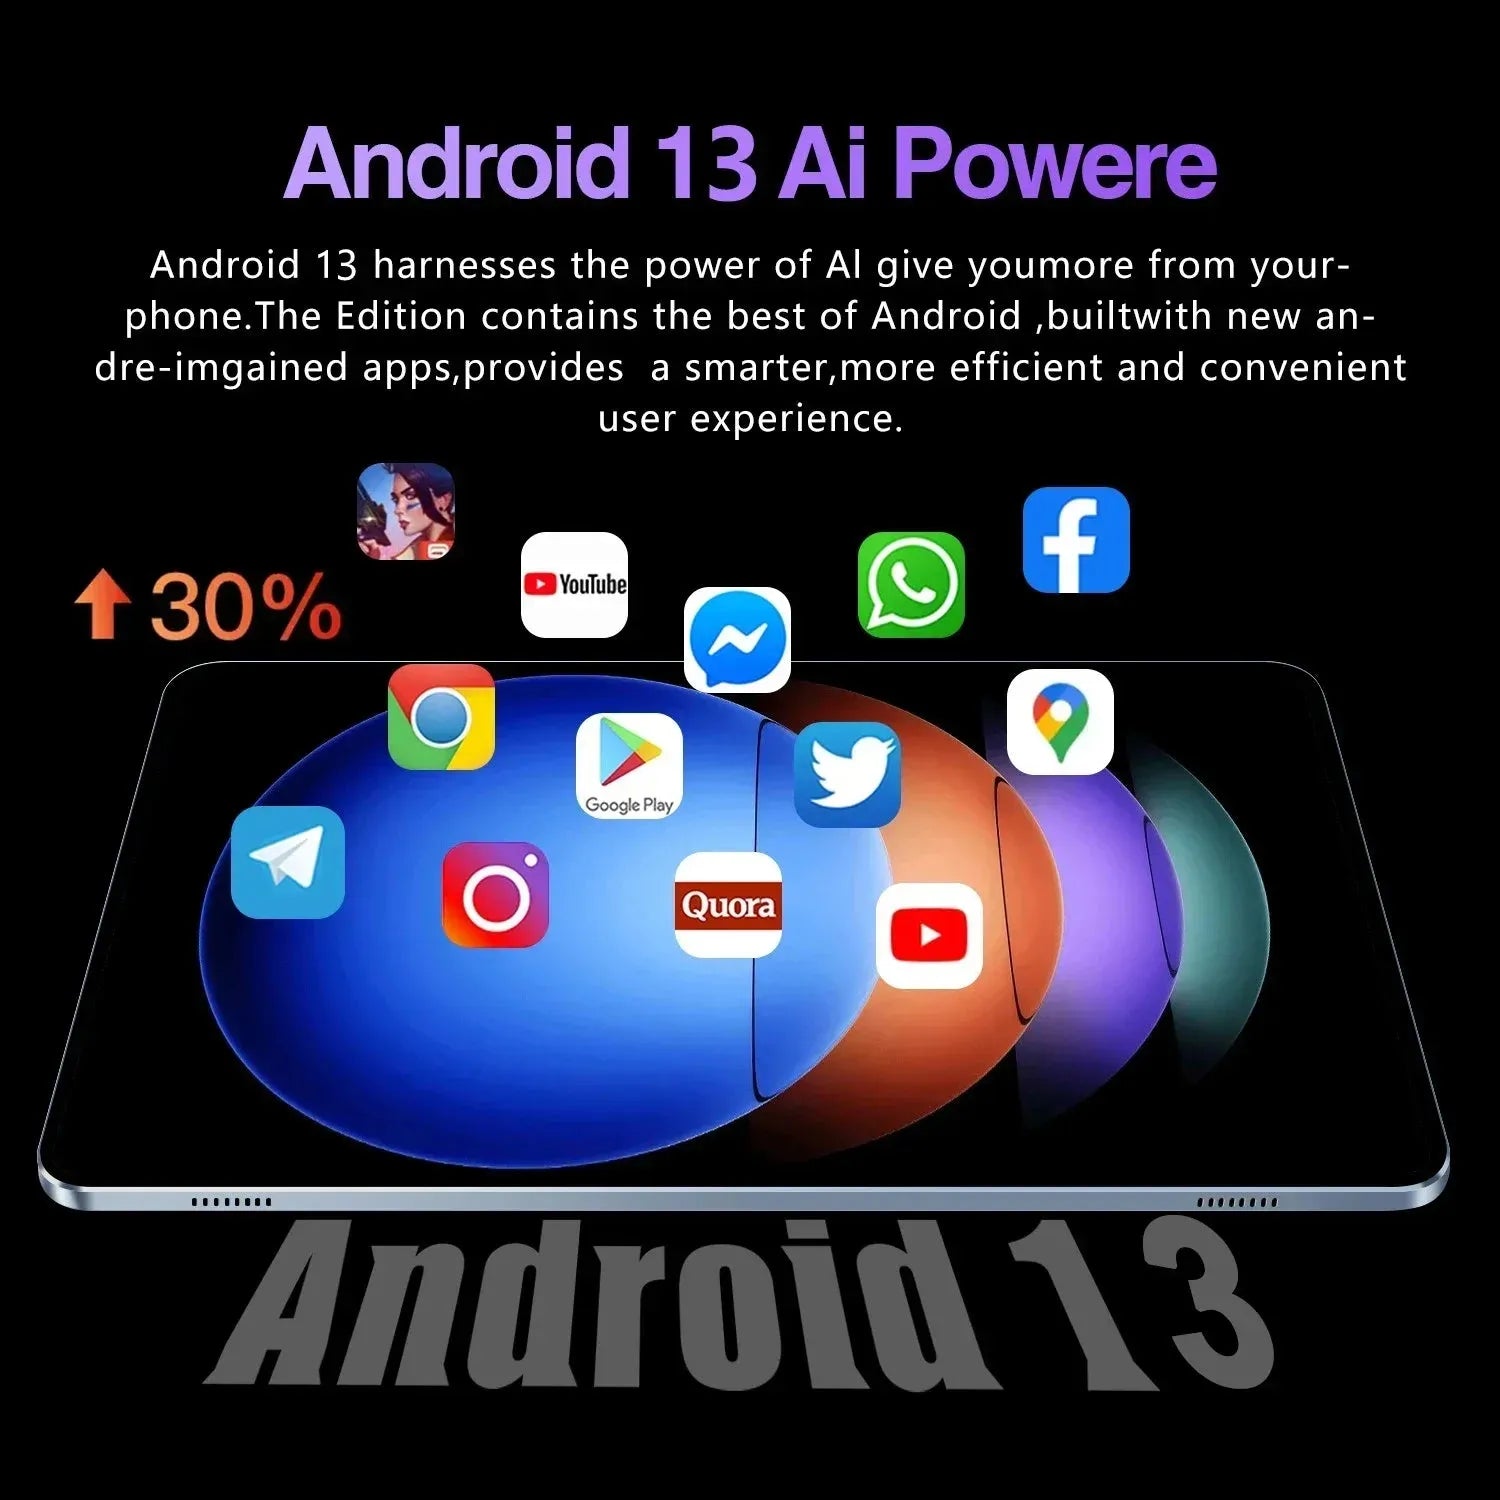 2024 Original Global Version HD 4K Pad 6S Pro Snapdragon 888 Tablet 11inch Android 13 16GB+1T 10000mAh 5G Dual SIM WiFi GPS Tab